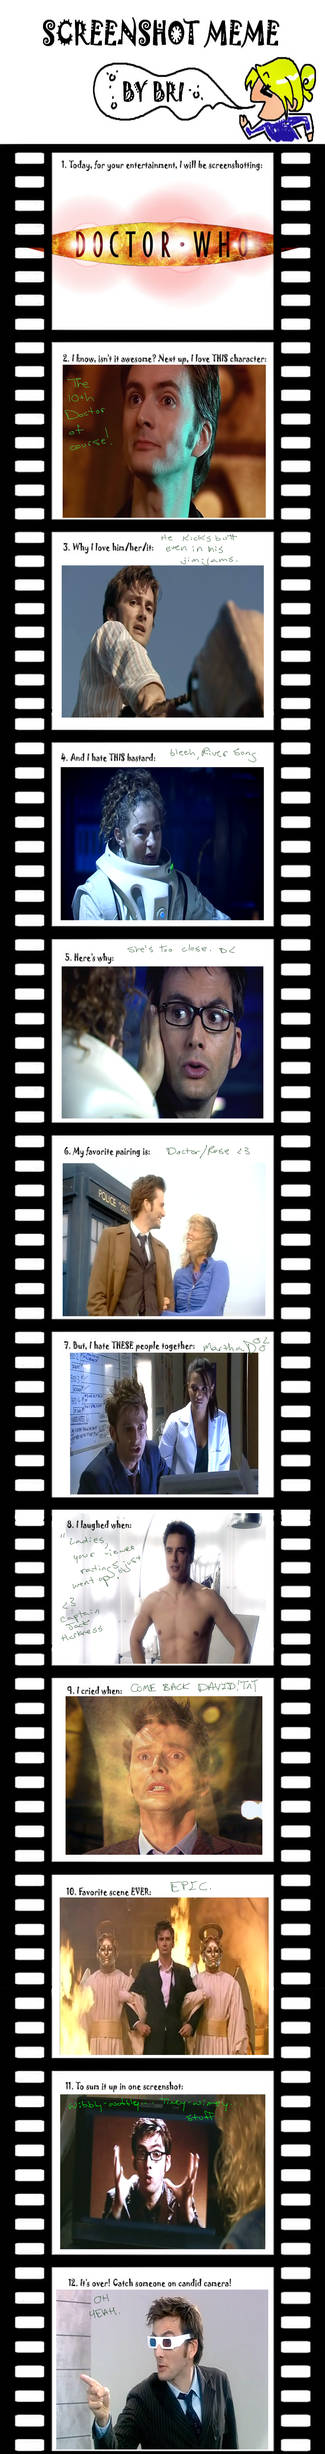 Doctor Who Screenshot Meme